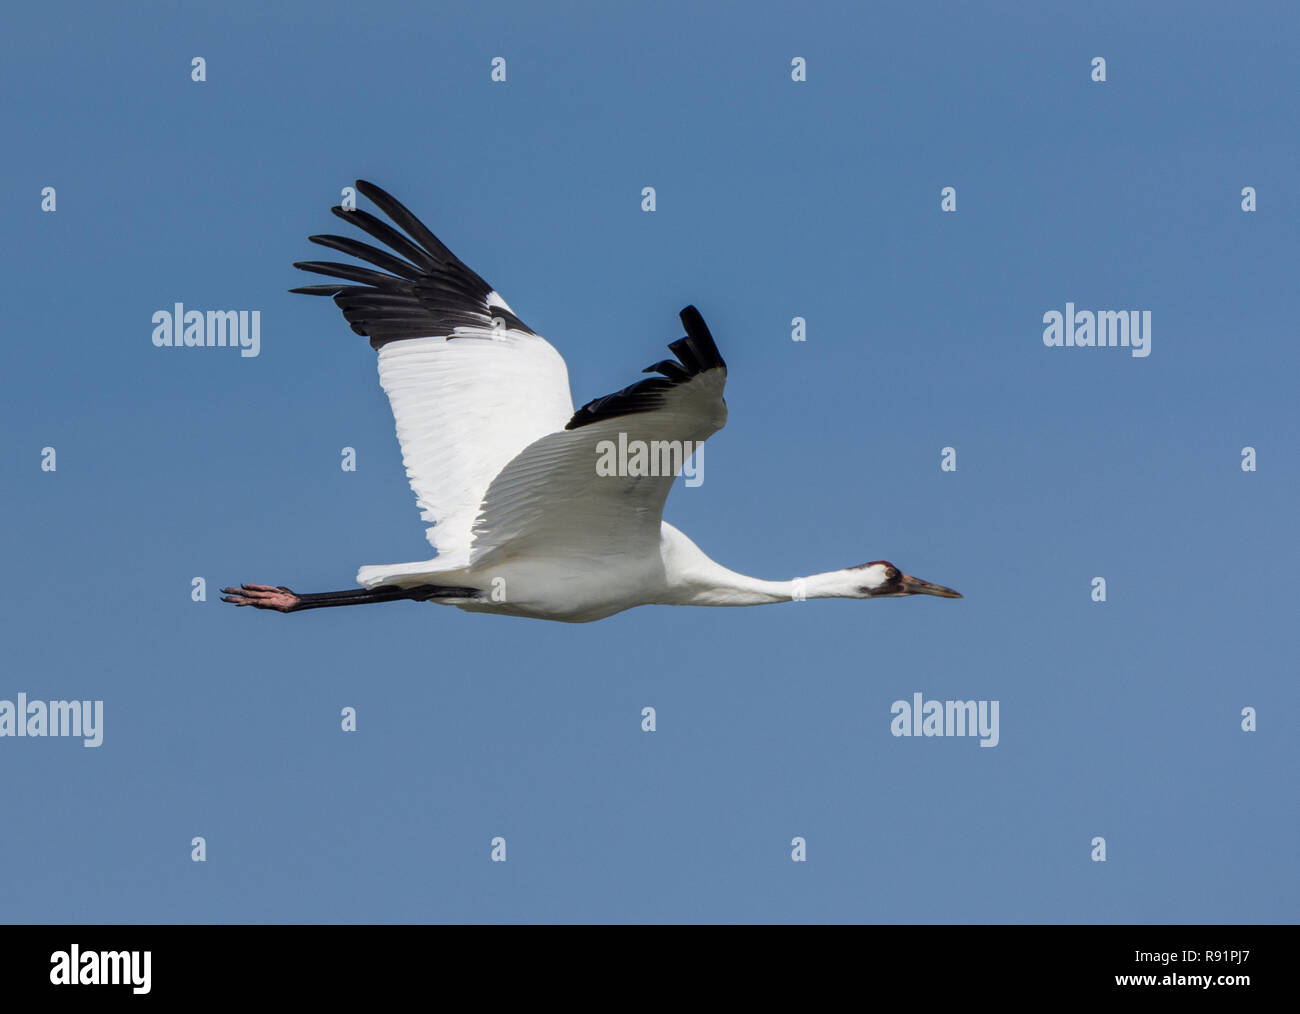 A Whooping Crane (Grus americana) flying over blue sky. Aransas National Wildlife Refuge, Texas, USA. Stock Photo